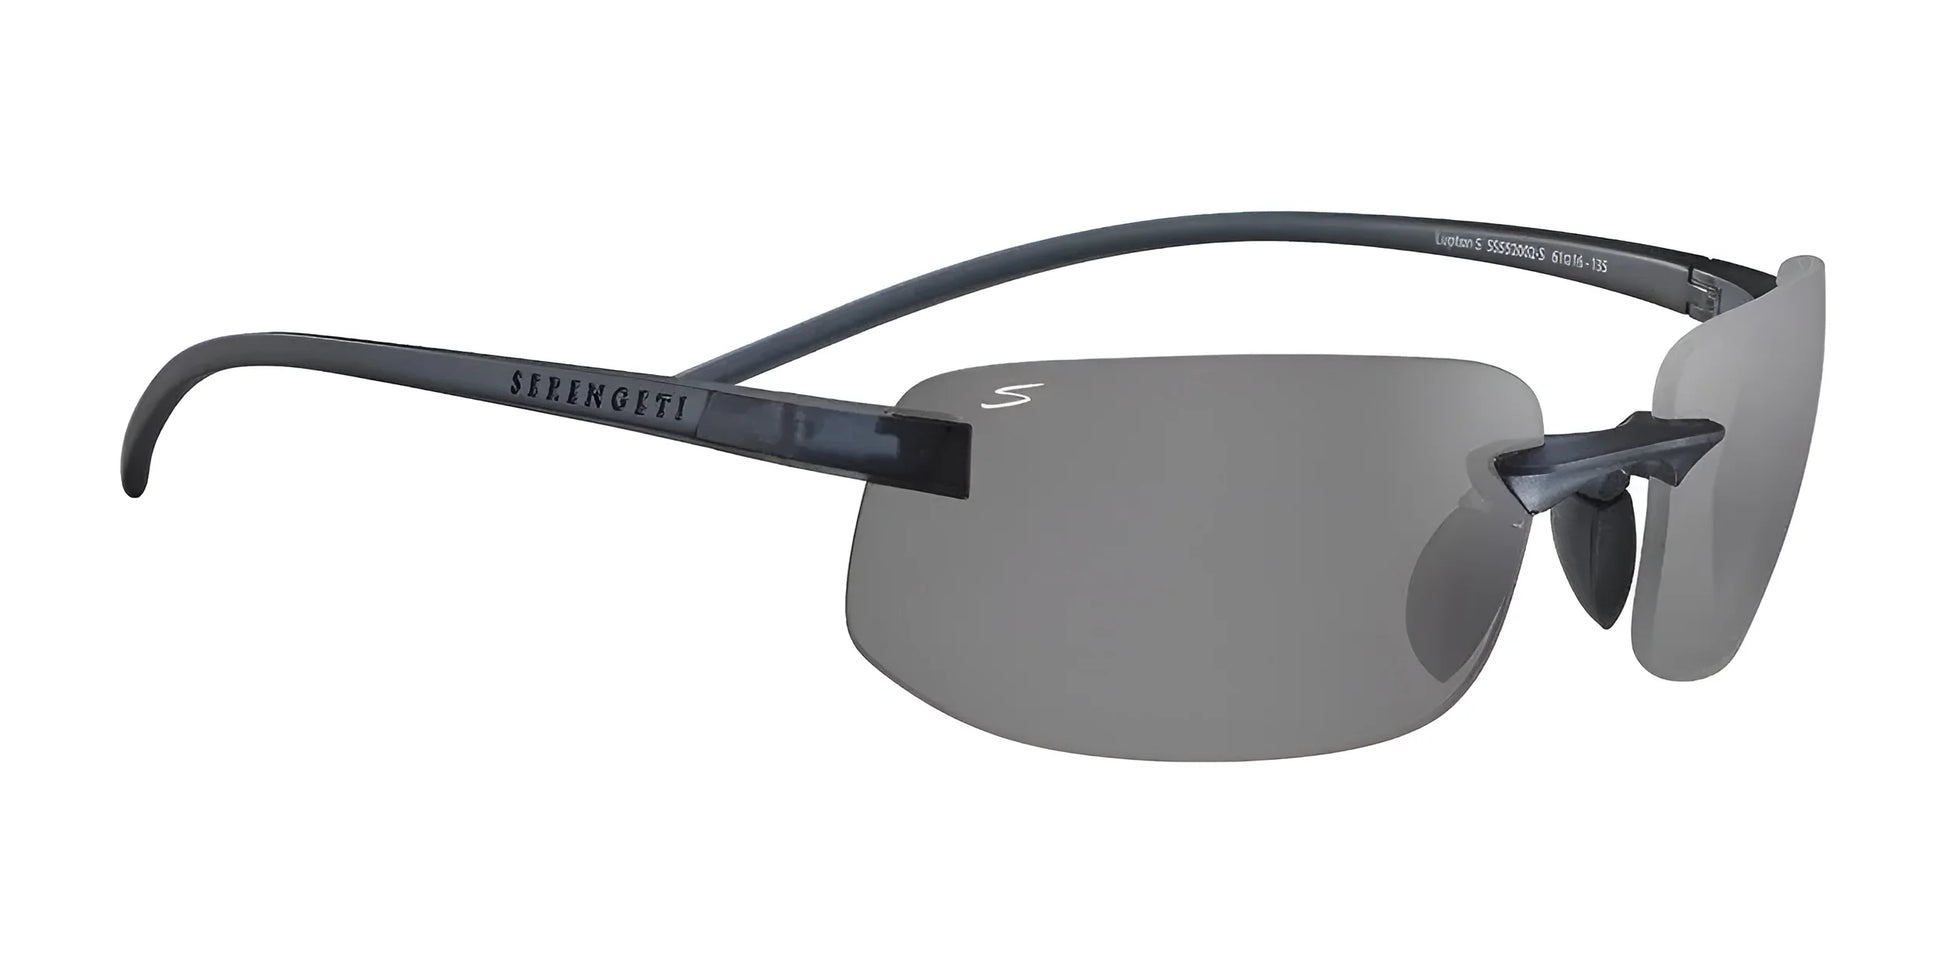 Serengeti Lupton Sunglasses Matte Crystal Black / PhD 2.0 Polarized CPG Cat 2 to 3